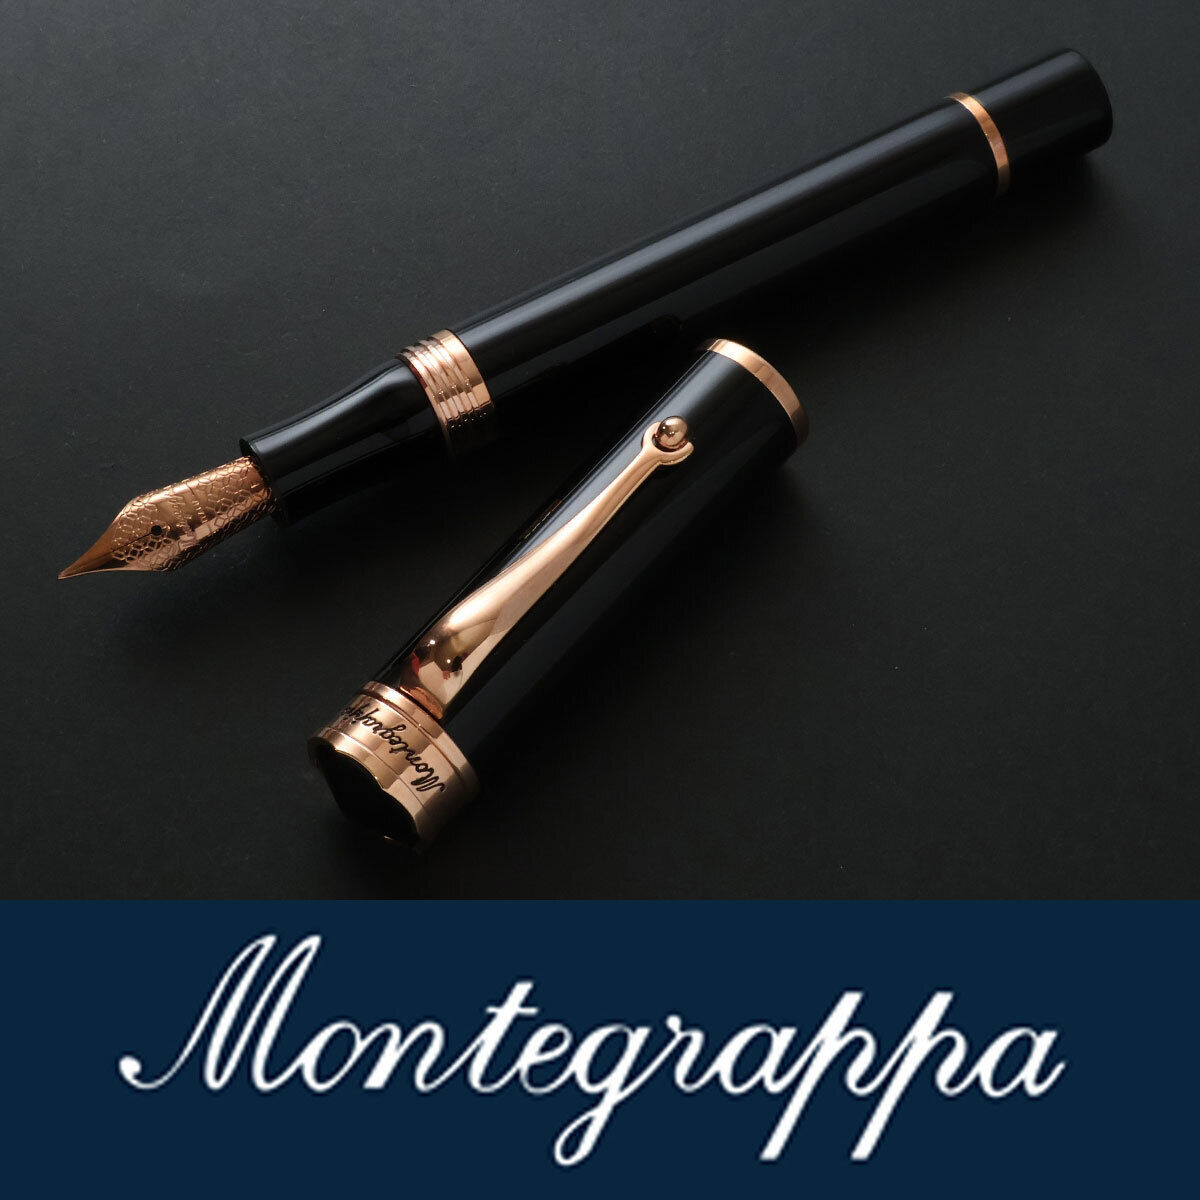 9102 Montegrappa Fountain pen List 41 800 yen Dogeal Black pink g